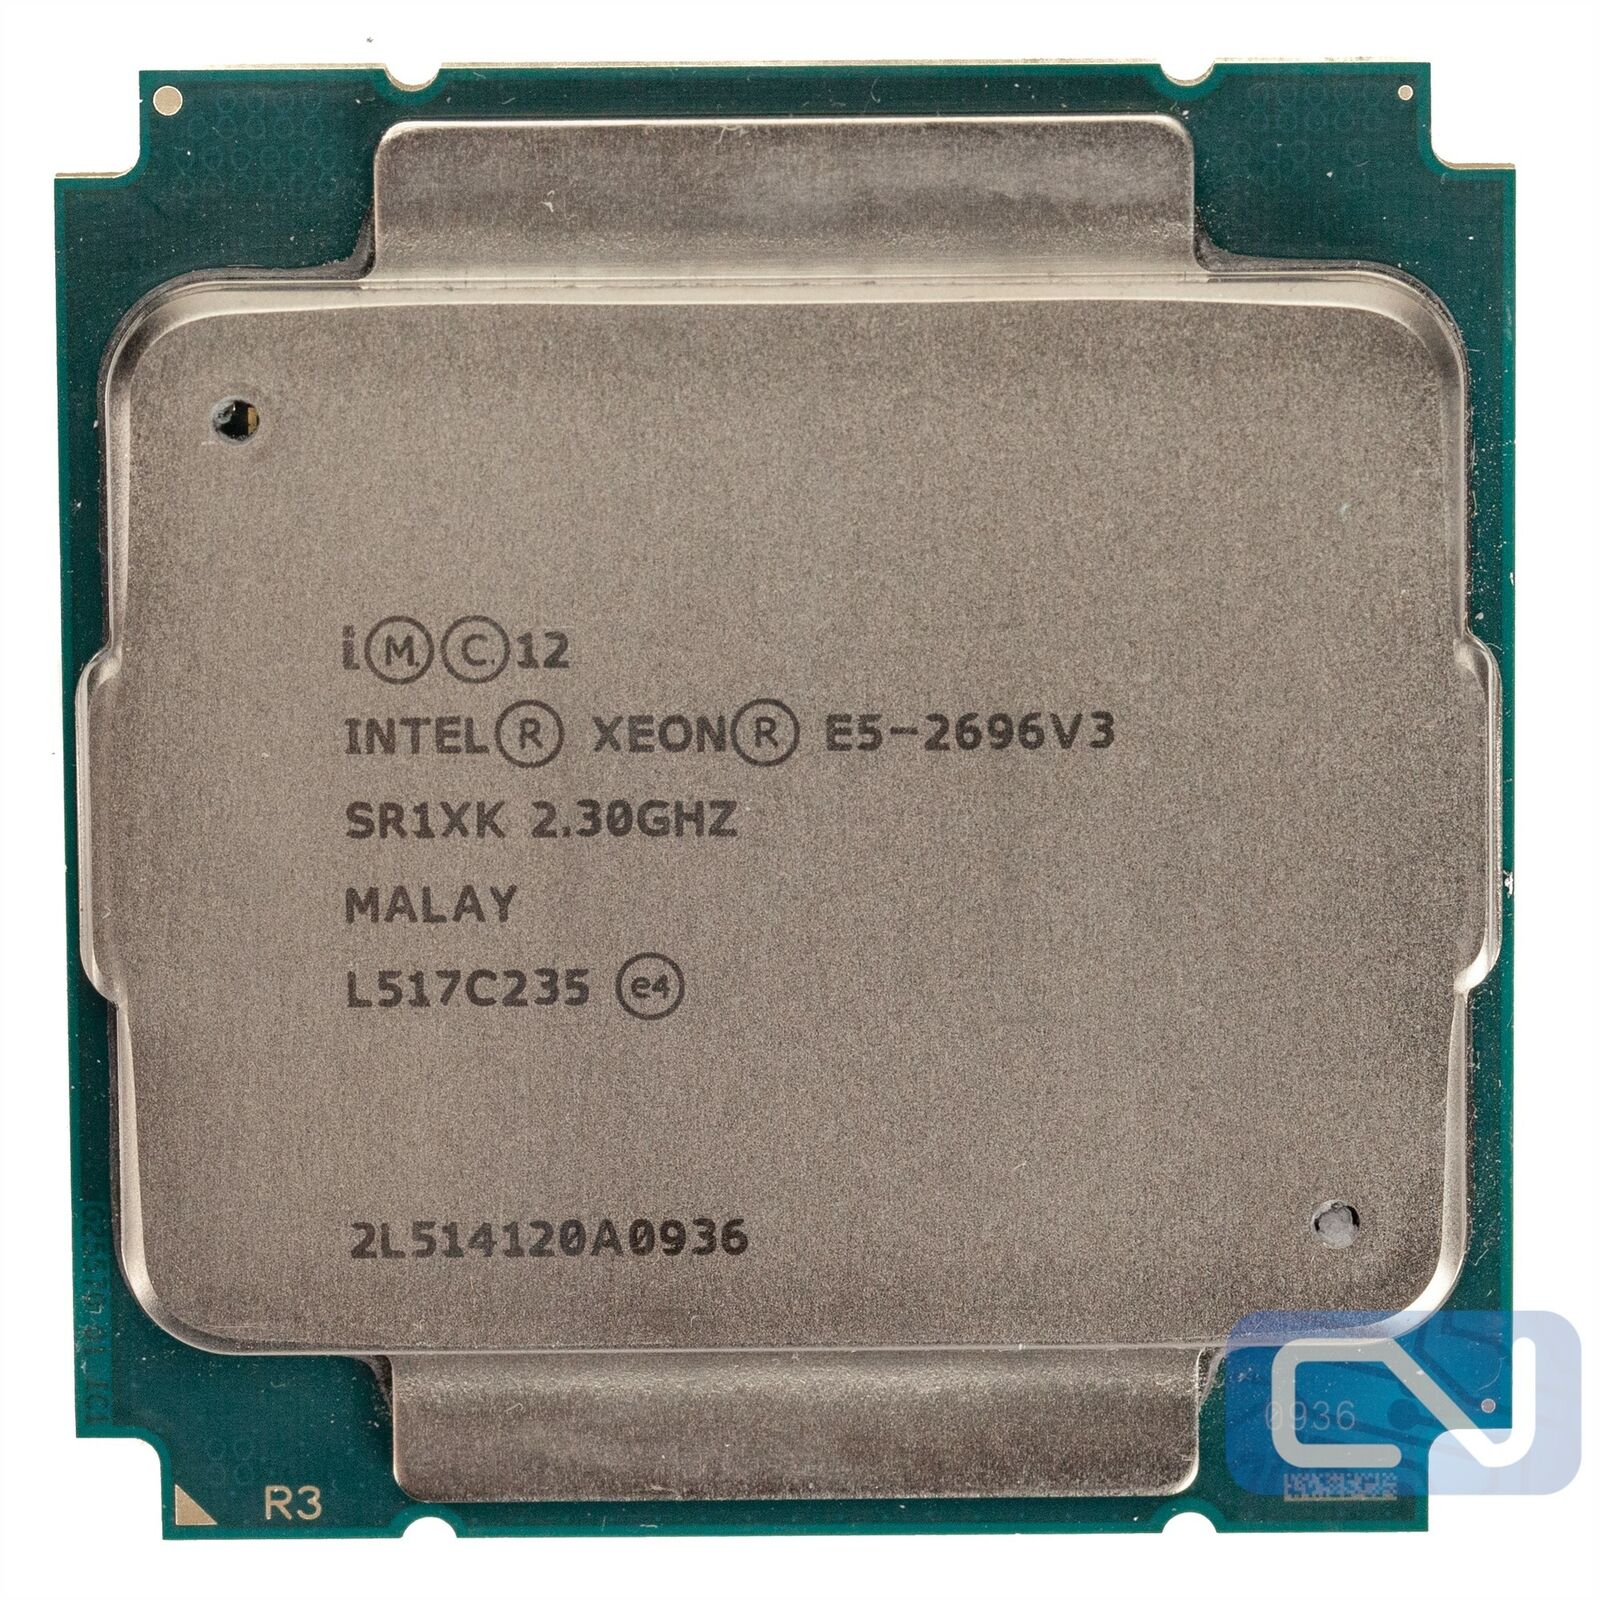 Intel Xeon E5-2696 v3 2.3 GHz 45 MB 18 Core SR1XK LGA2011-3 Fair Grade CPU